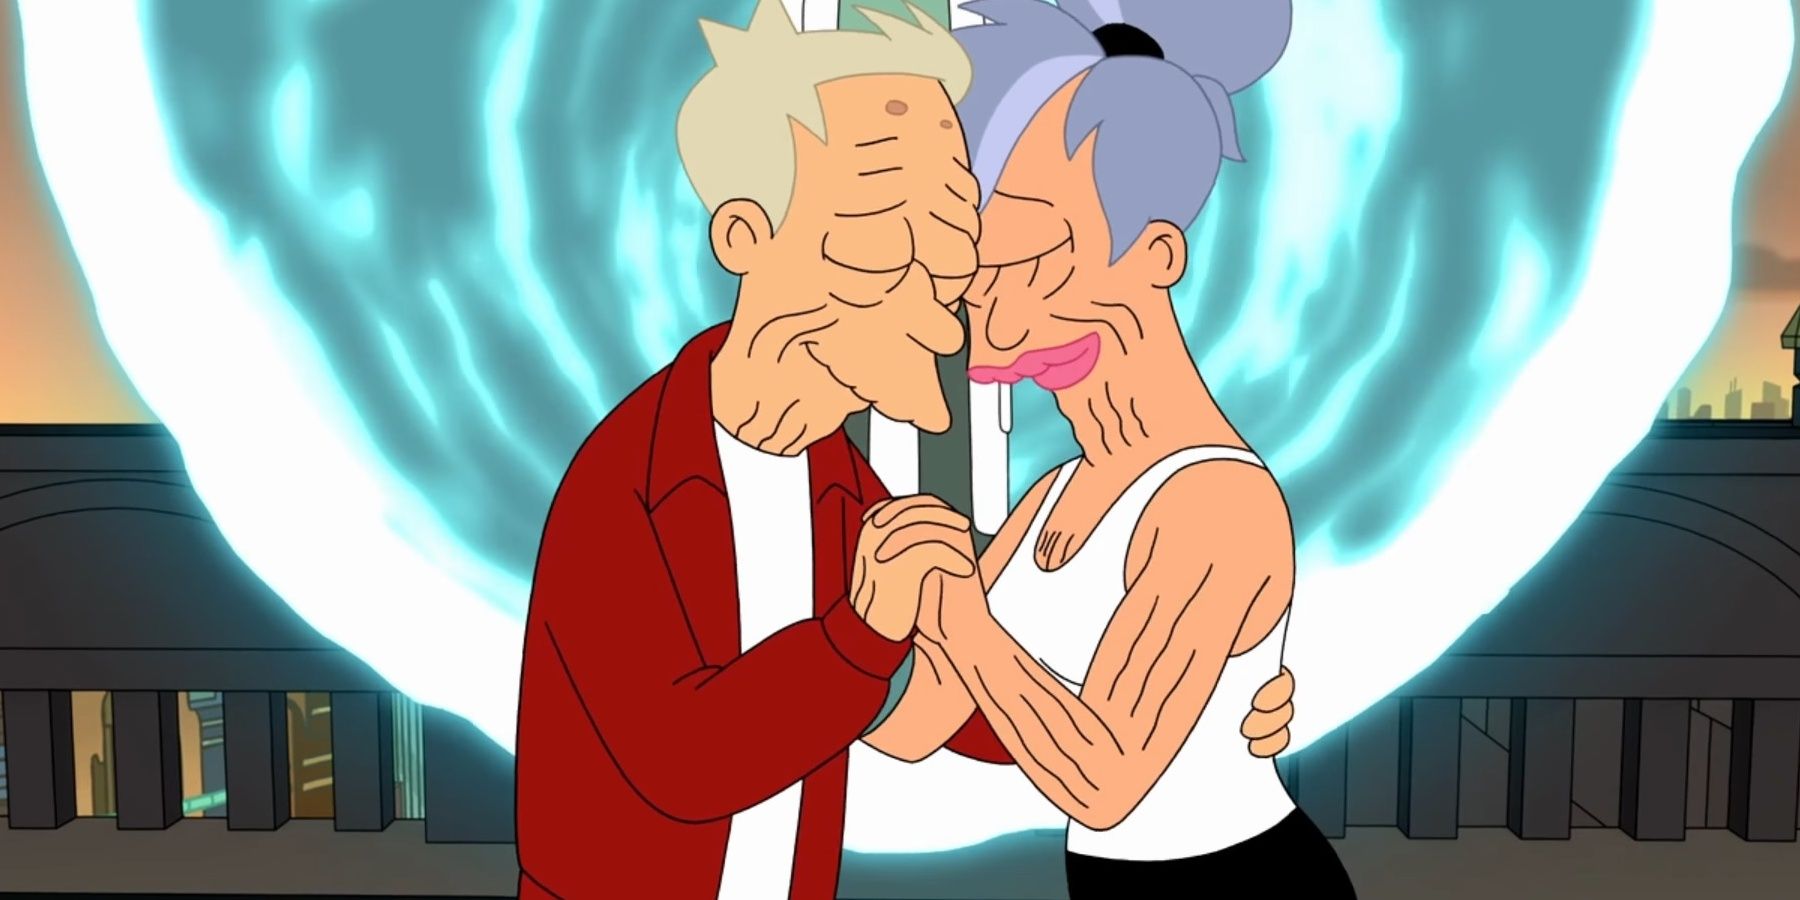 Futurama Ending With Fry And Leela